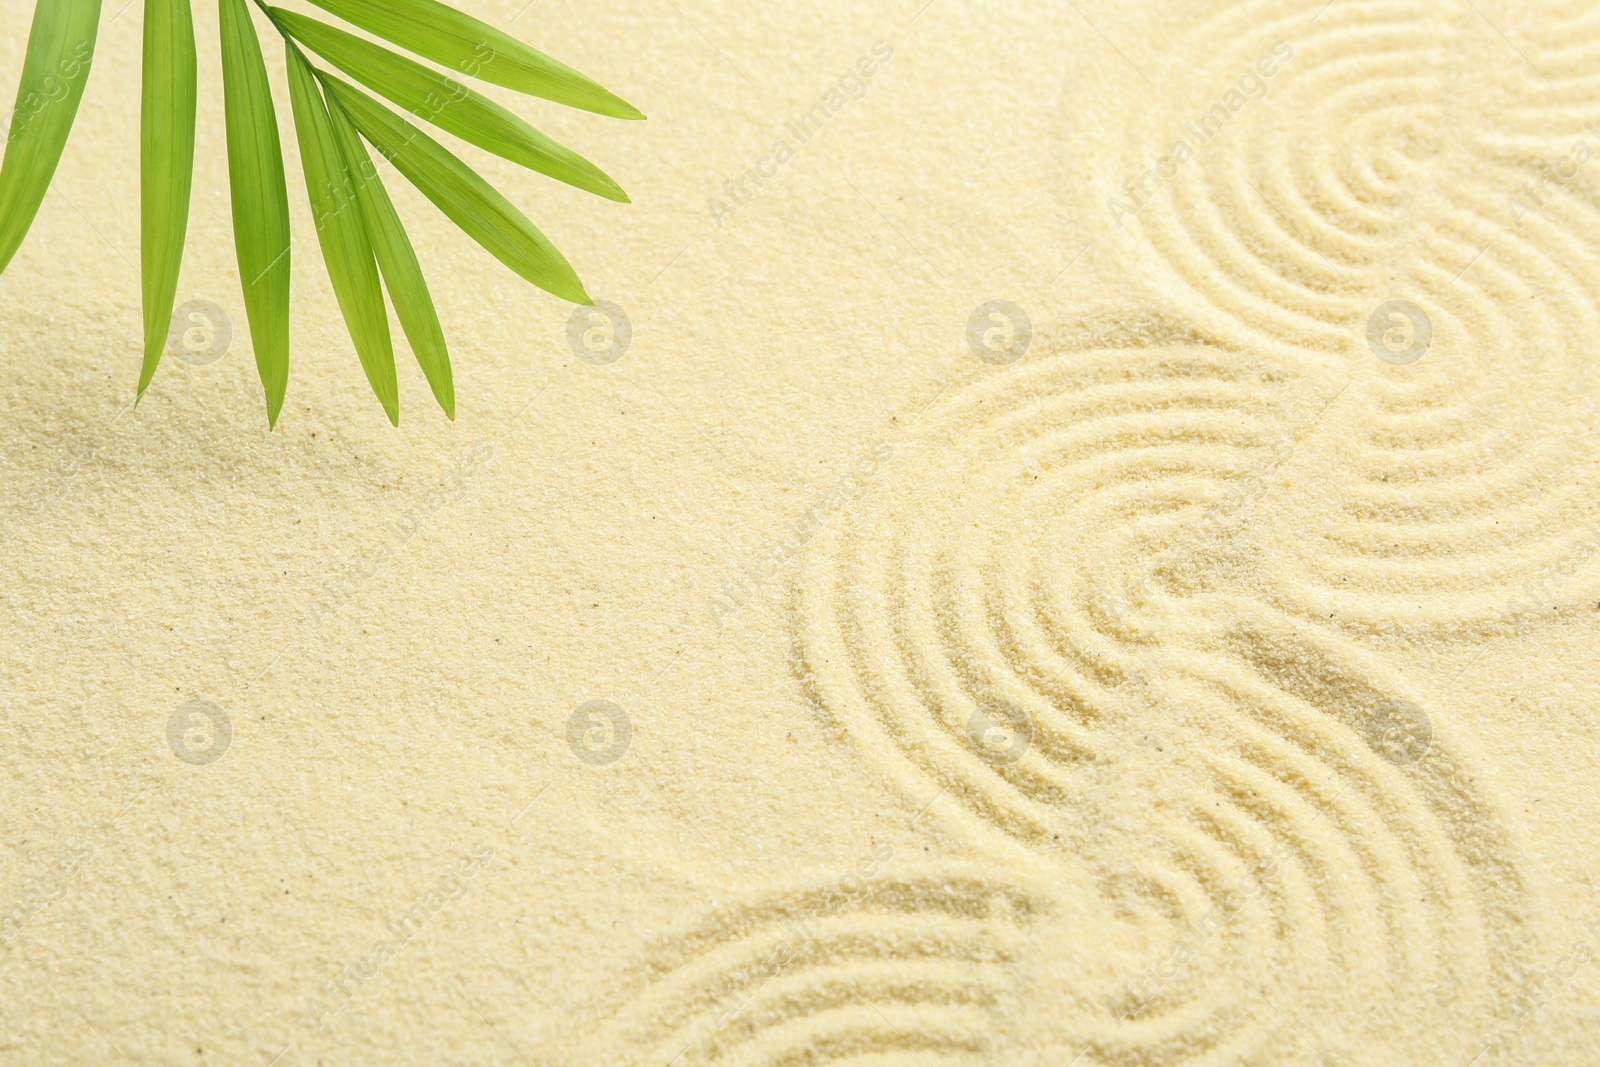 Photo of Zen rock garden. Wave pattern and green leaf on beige sand